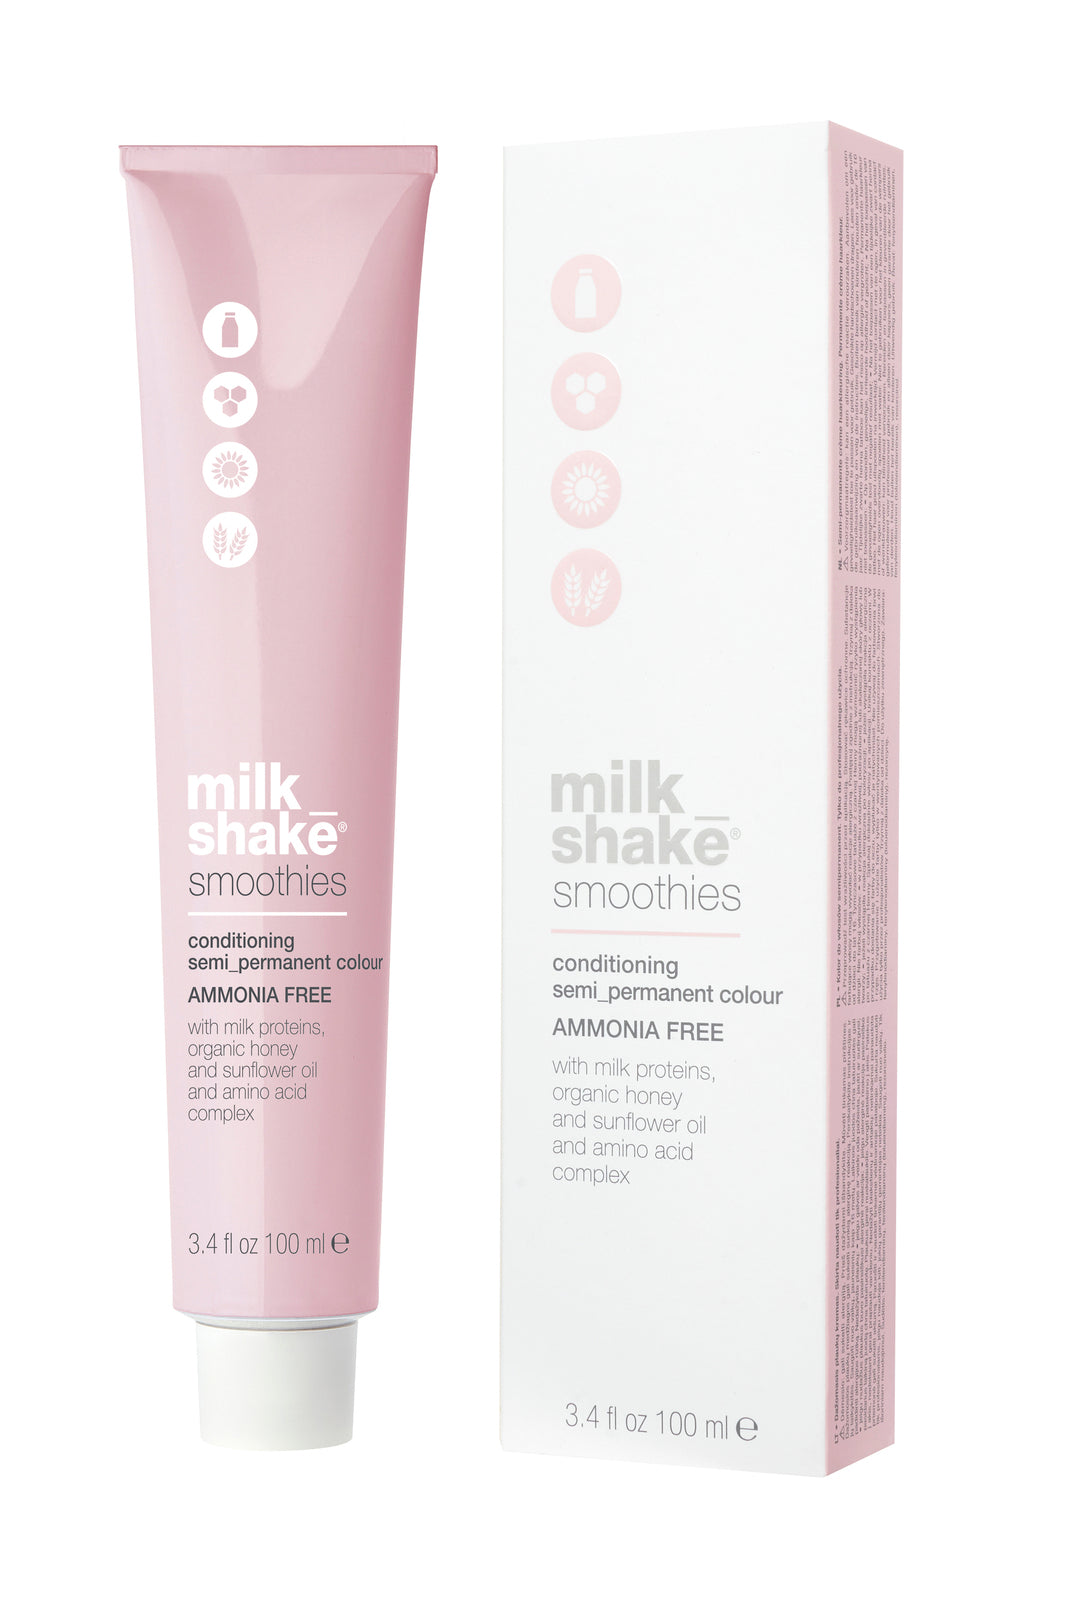 Milkshake smoothies semi-permanent color 8.33